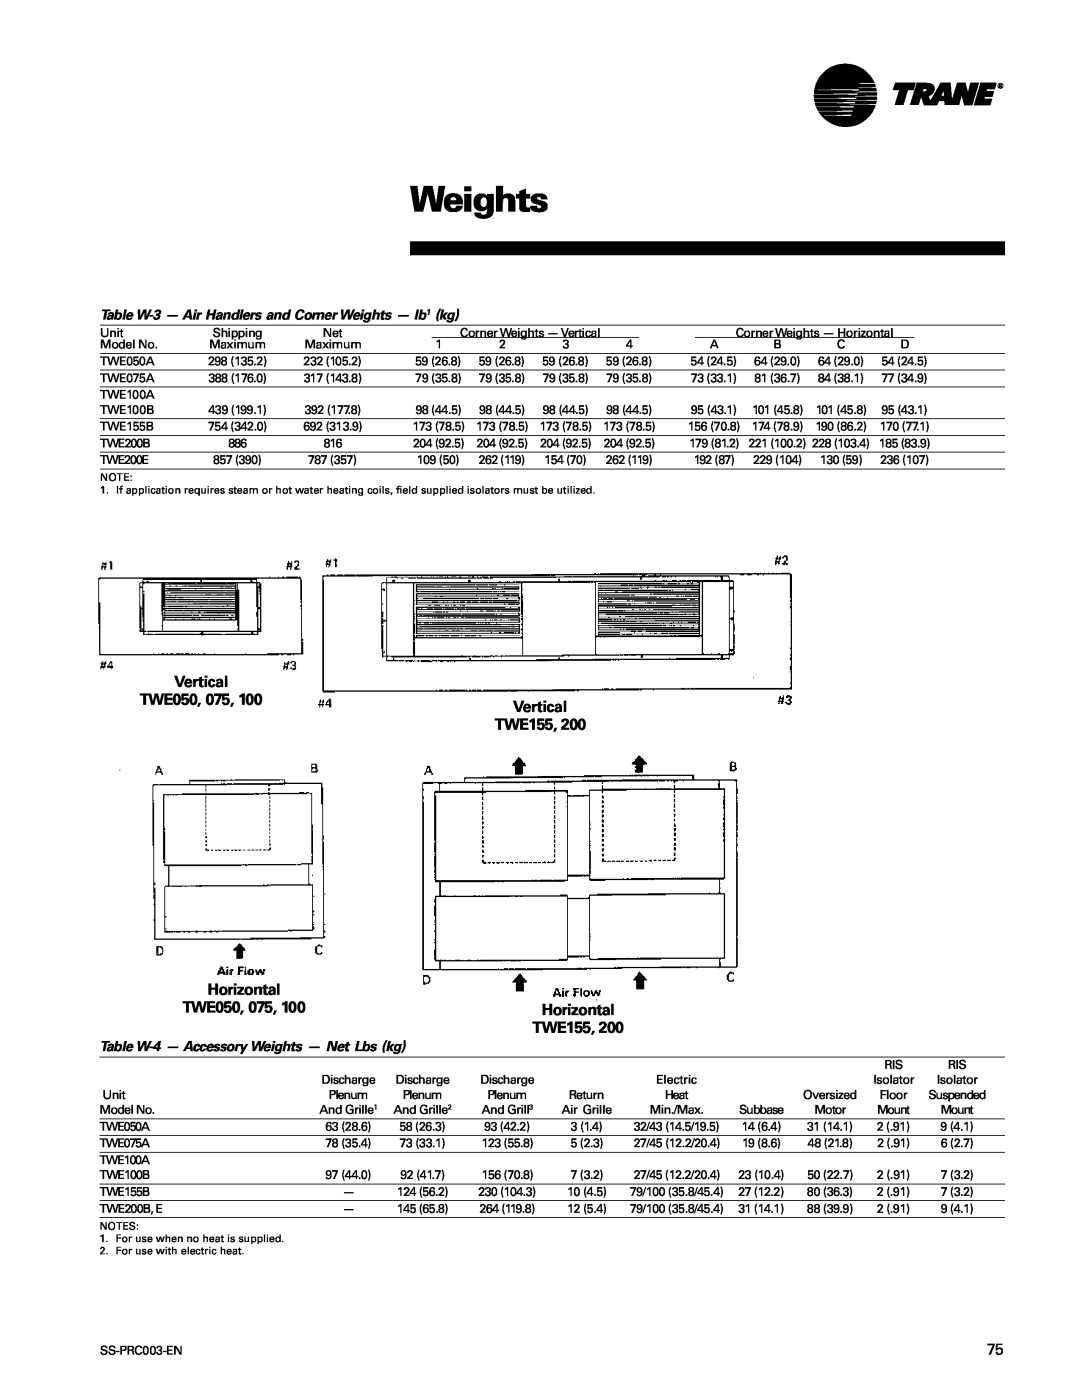 Trane SS-PRC003-EN manual Vertical TWE050, TWE155, Table W-4- Accessory Weights - Net Lbs kg 